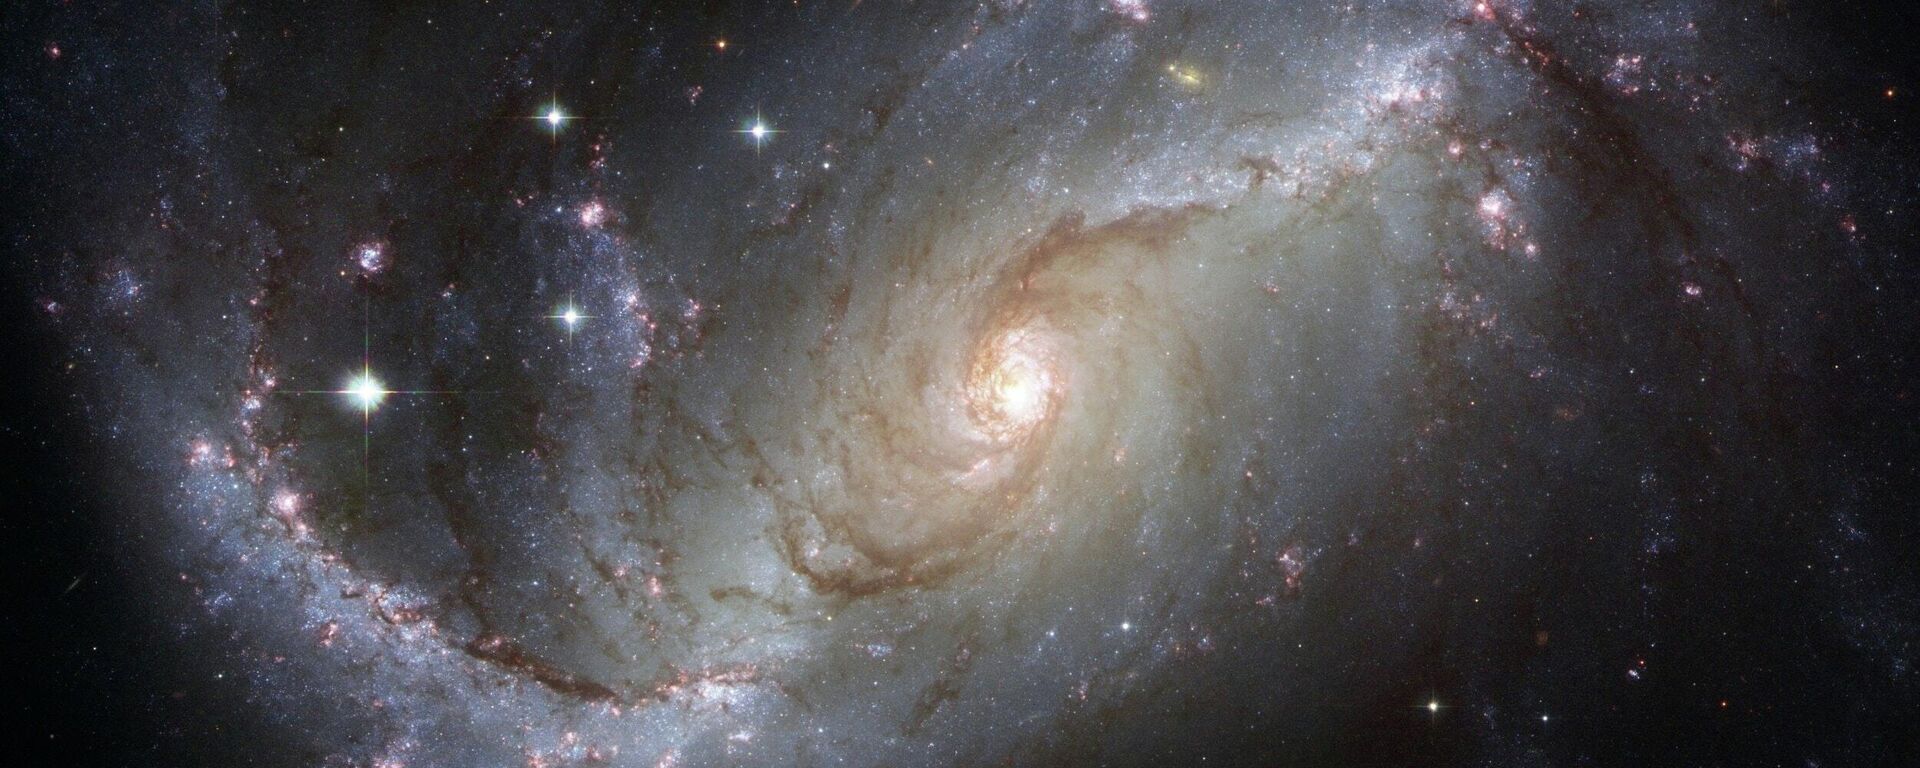 Una galaxia espiral, imagen ilustrativa - Sputnik Mundo, 1920, 21.05.2021